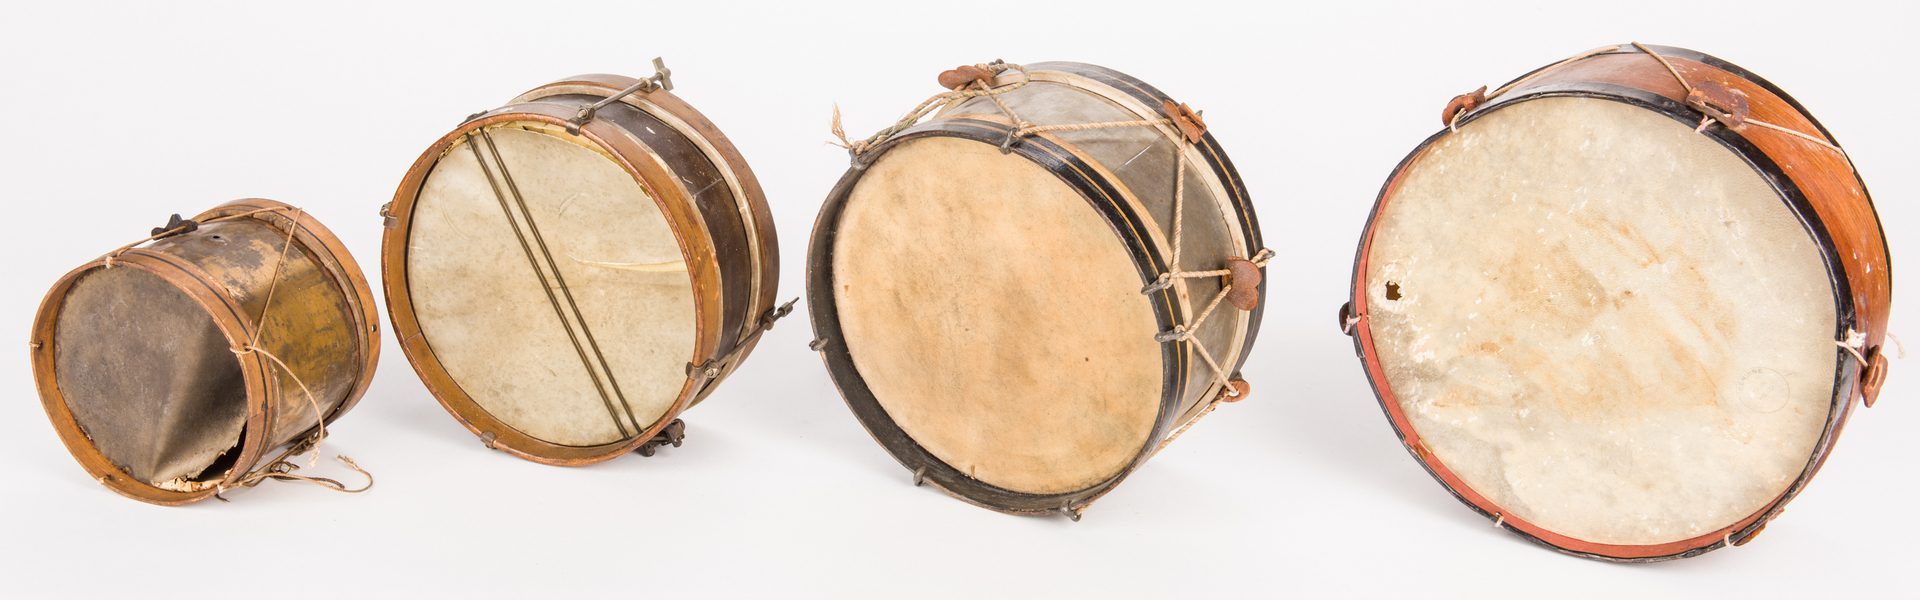 Lot 823: 4 Antique Snare Drums